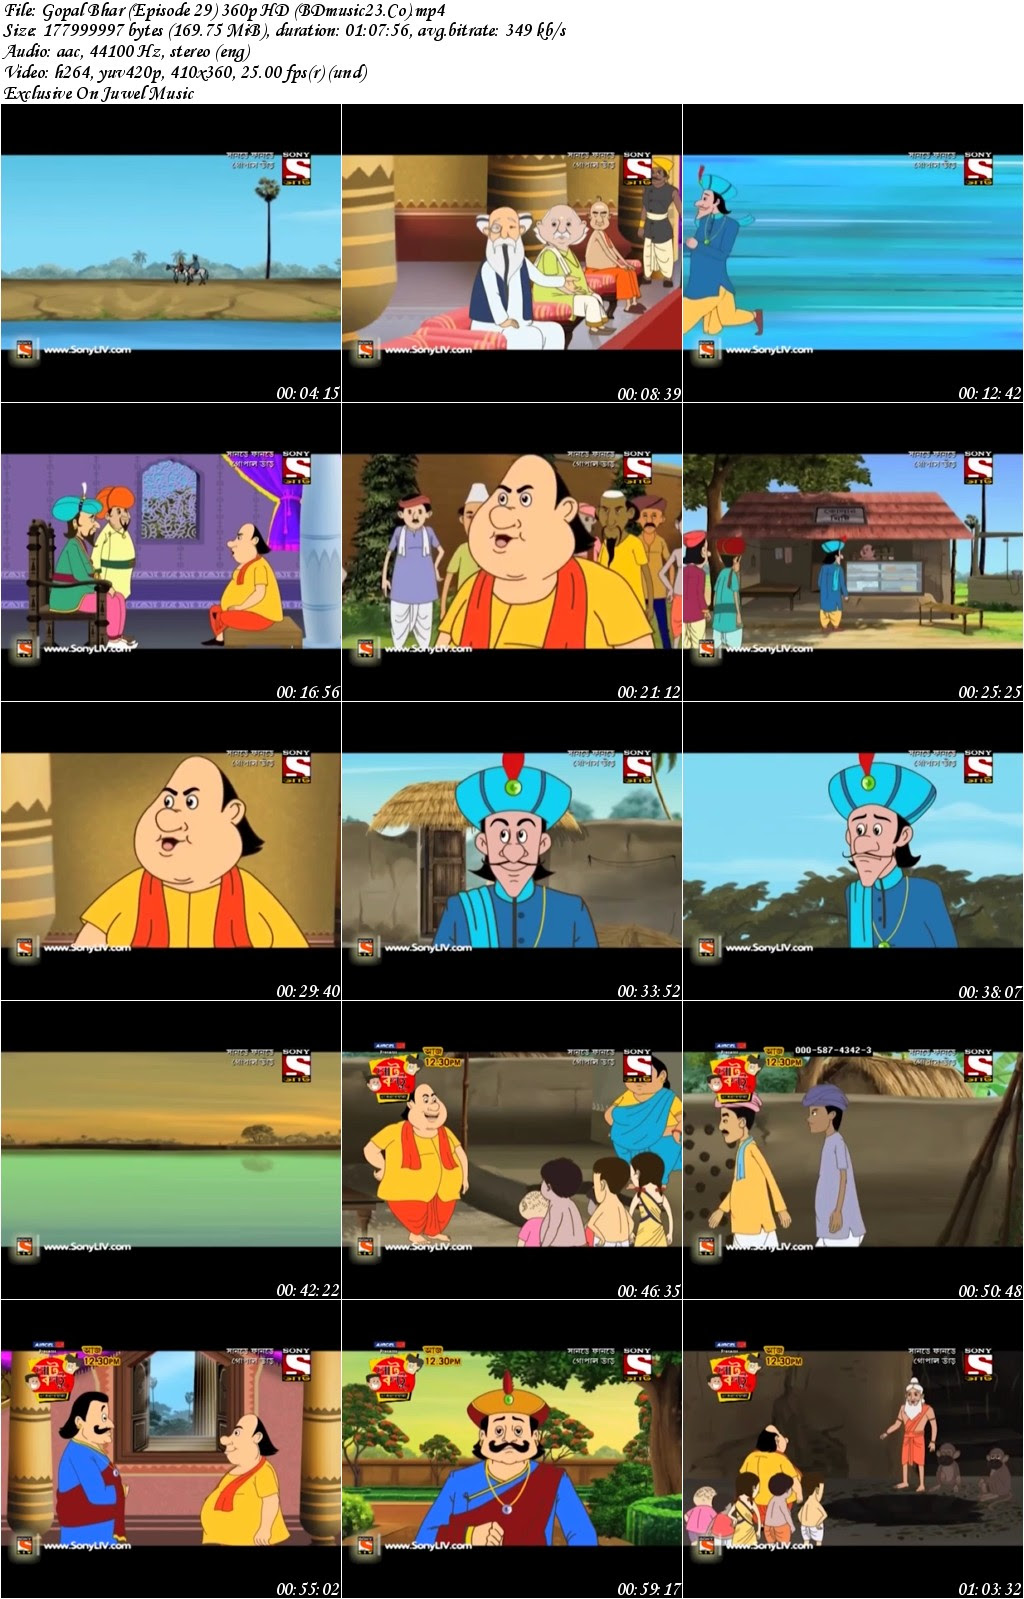 Gopal Bhar (Bengali) Fun Time Episode 29 HD